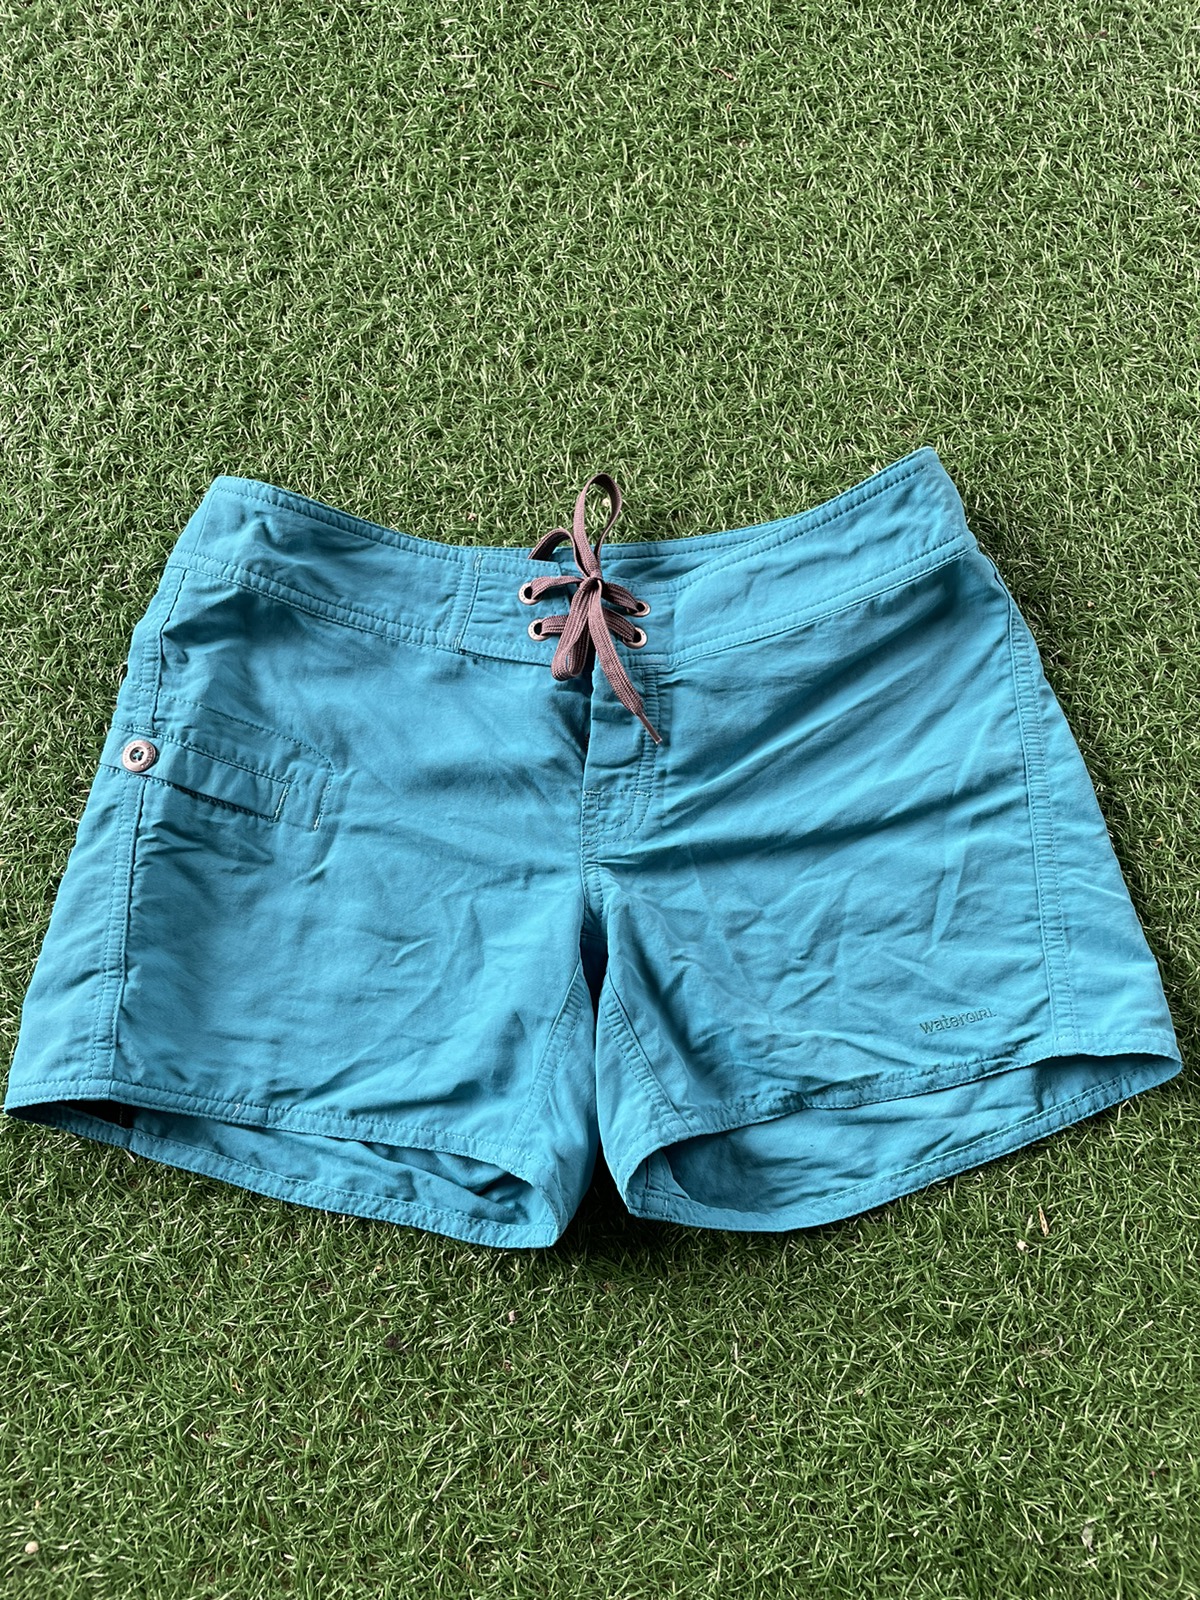 ⚡️Patagonia Water Girl Sexy Shorts Pants - 1